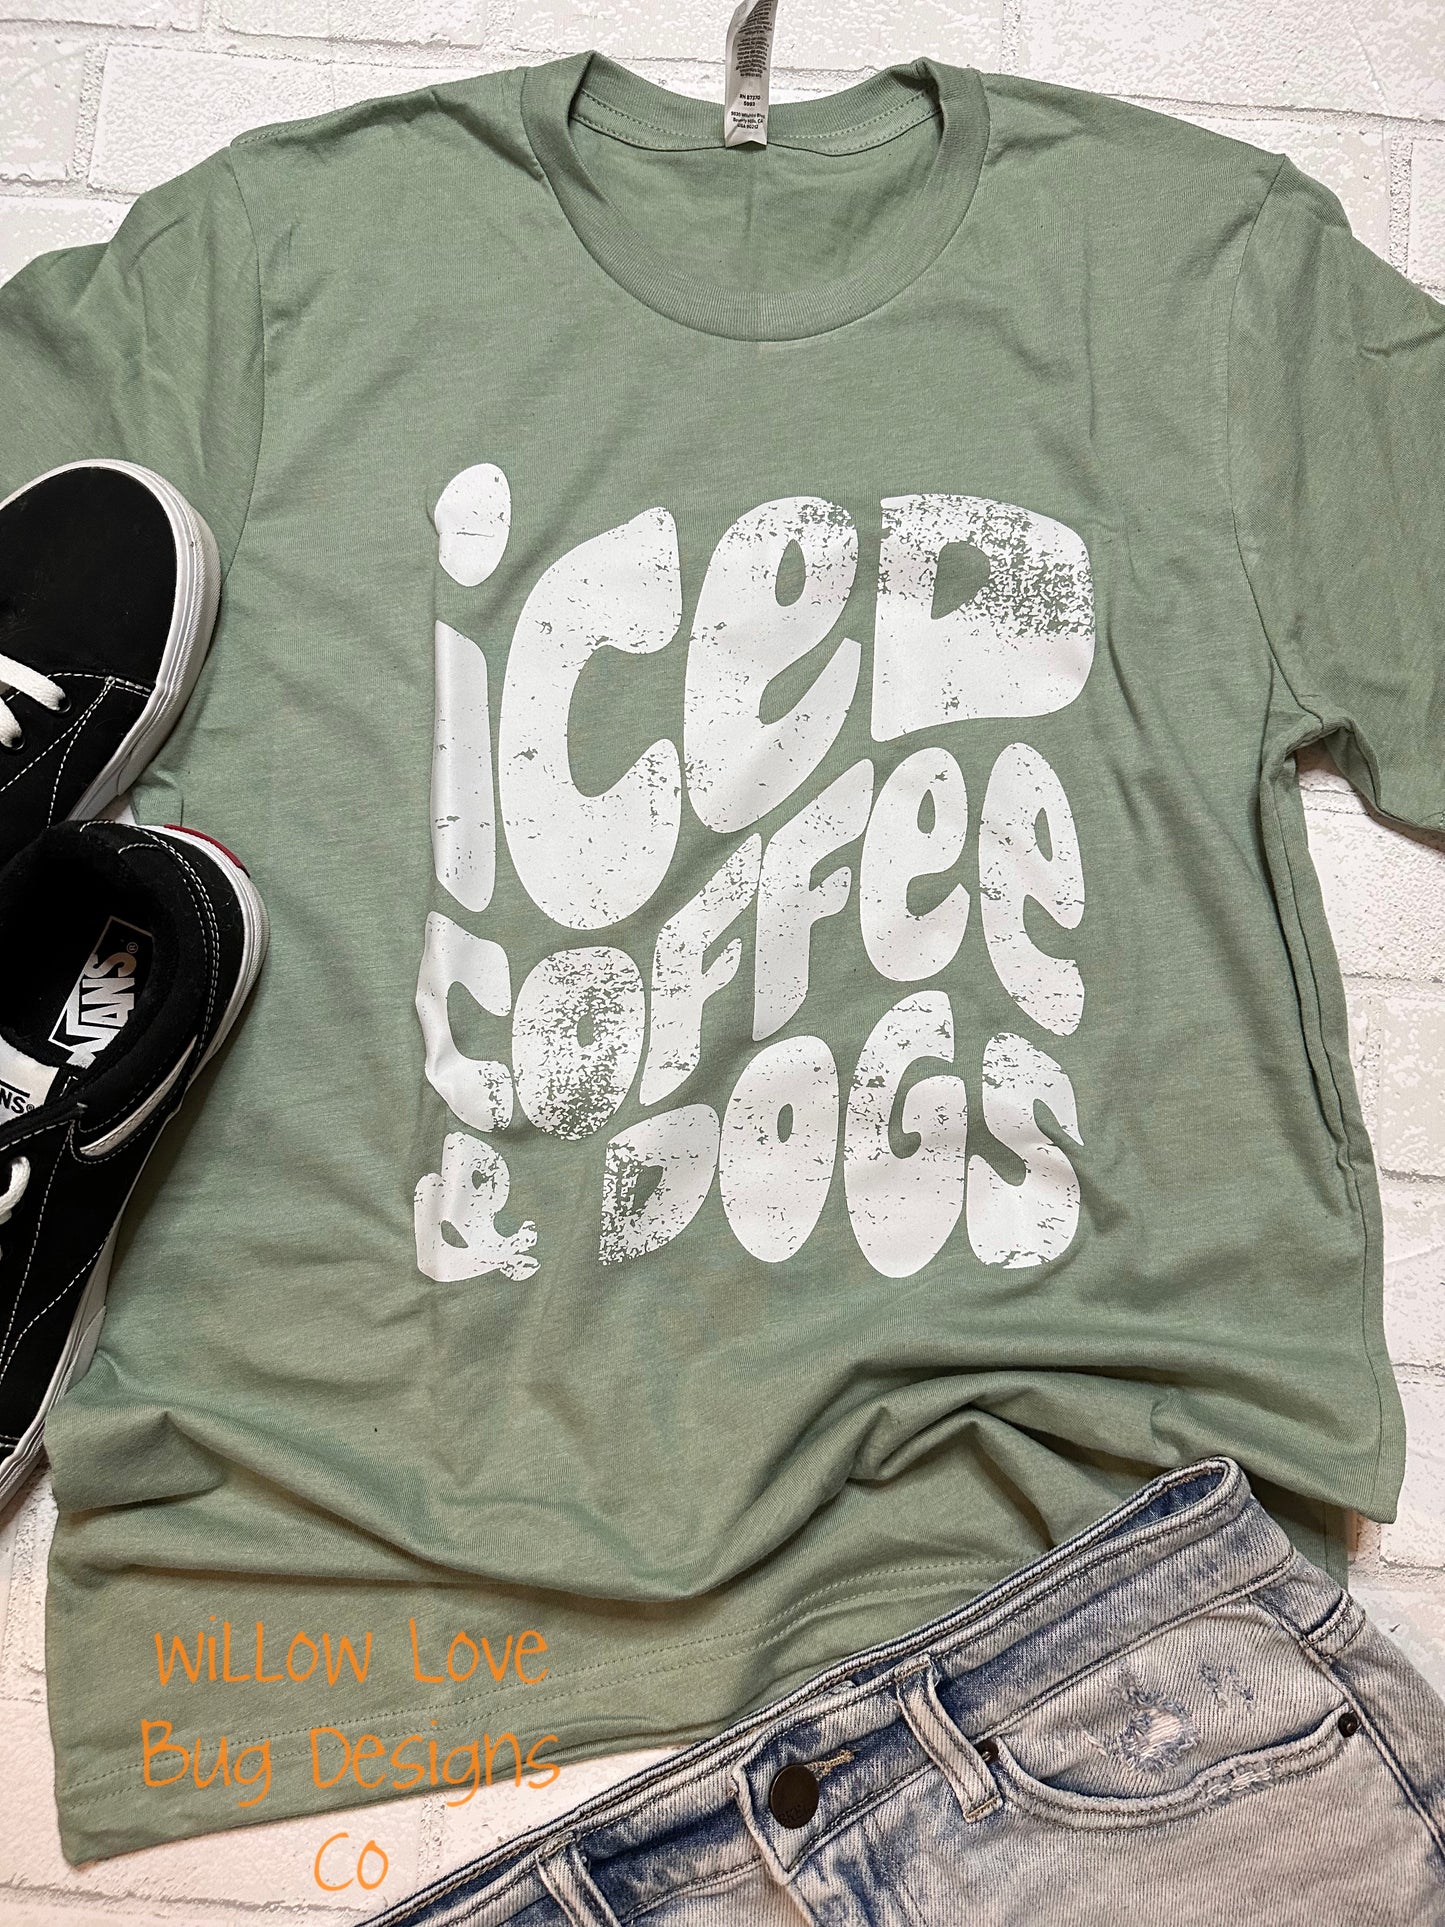 Iced Coffee & Dogs Tee - Willow Love Bug Designs 